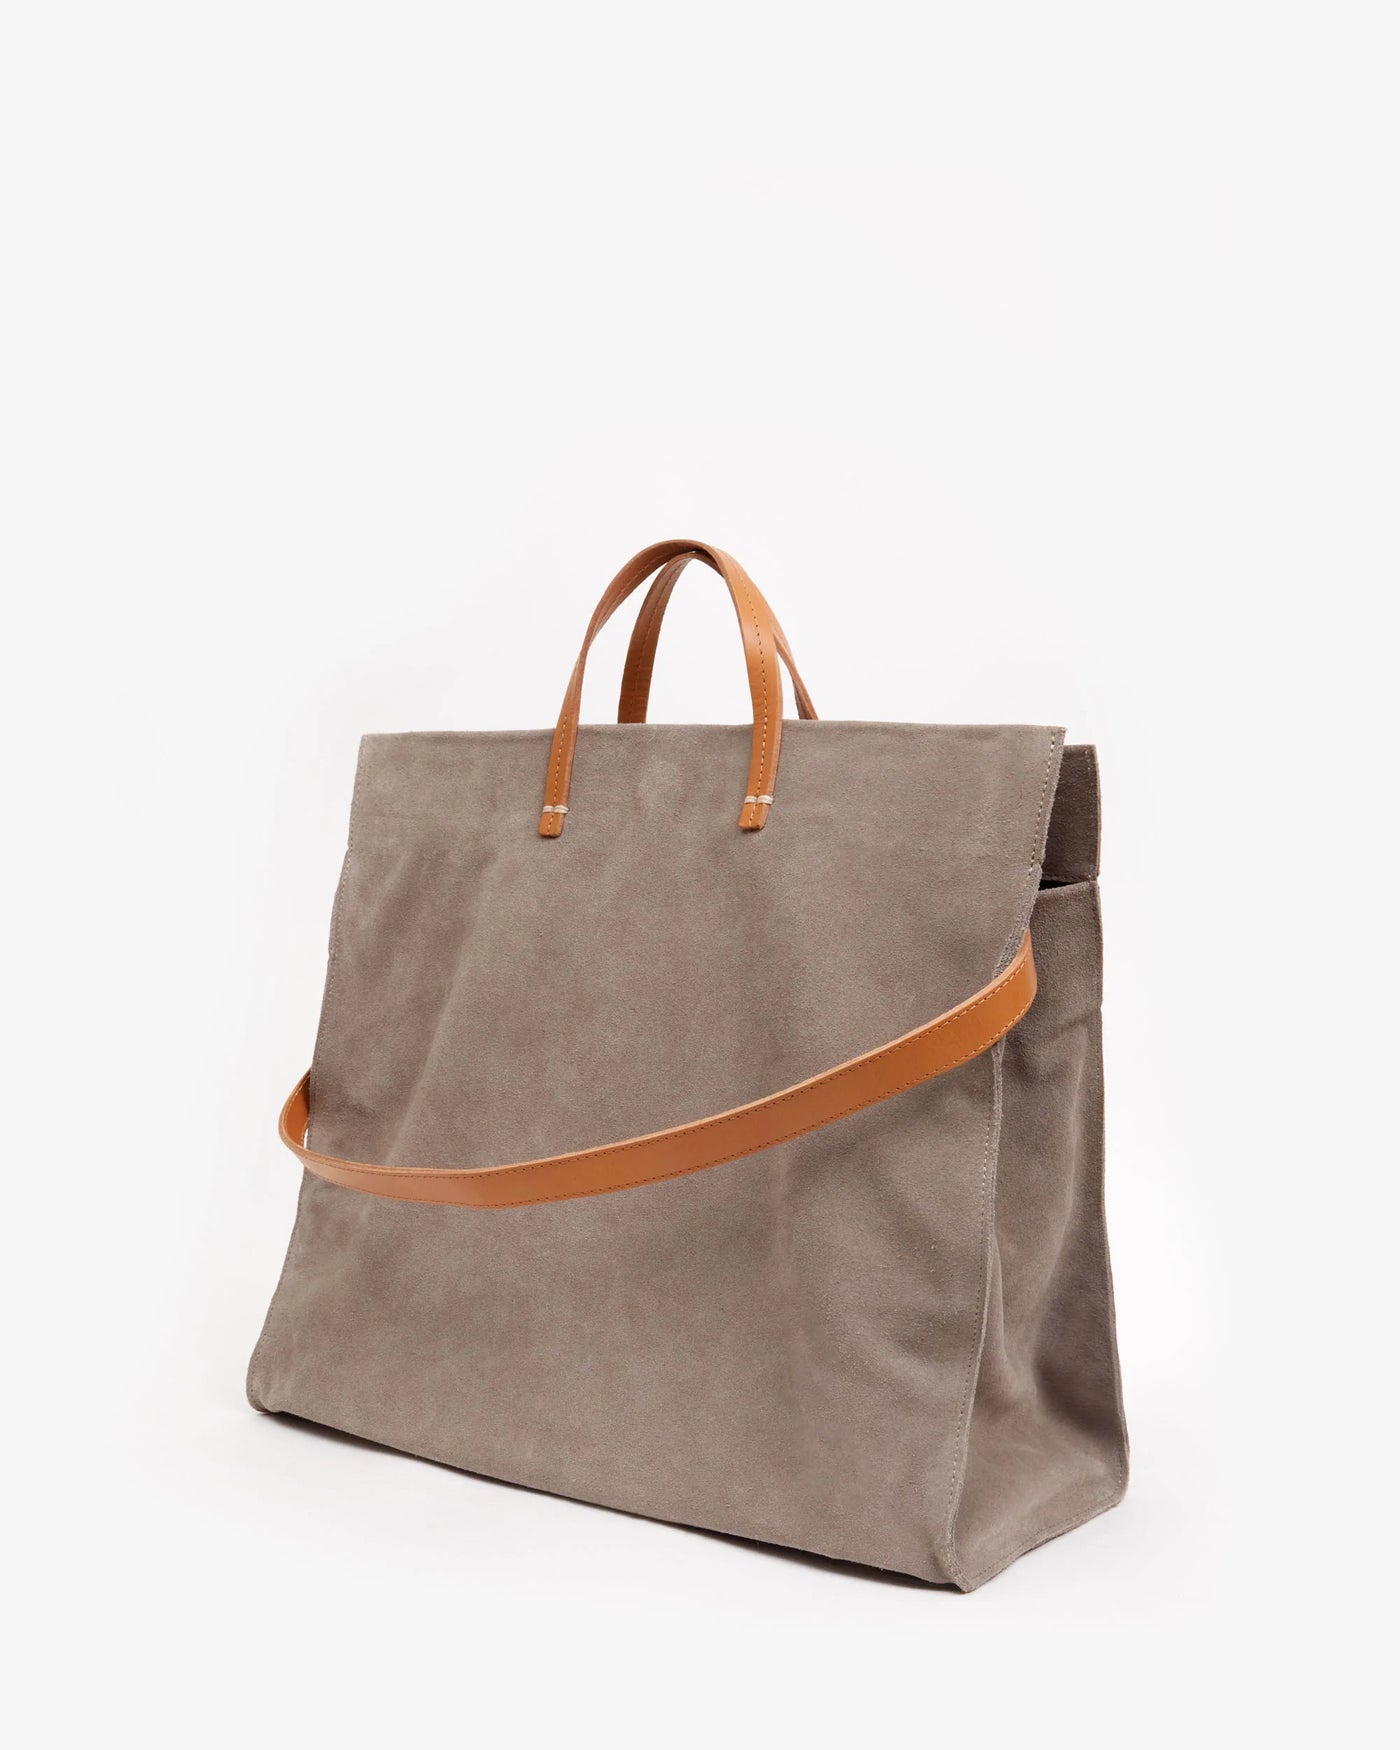 Clare V. Le Zip Bag w/ Front Pocket in Cognac & Pacific Stripe